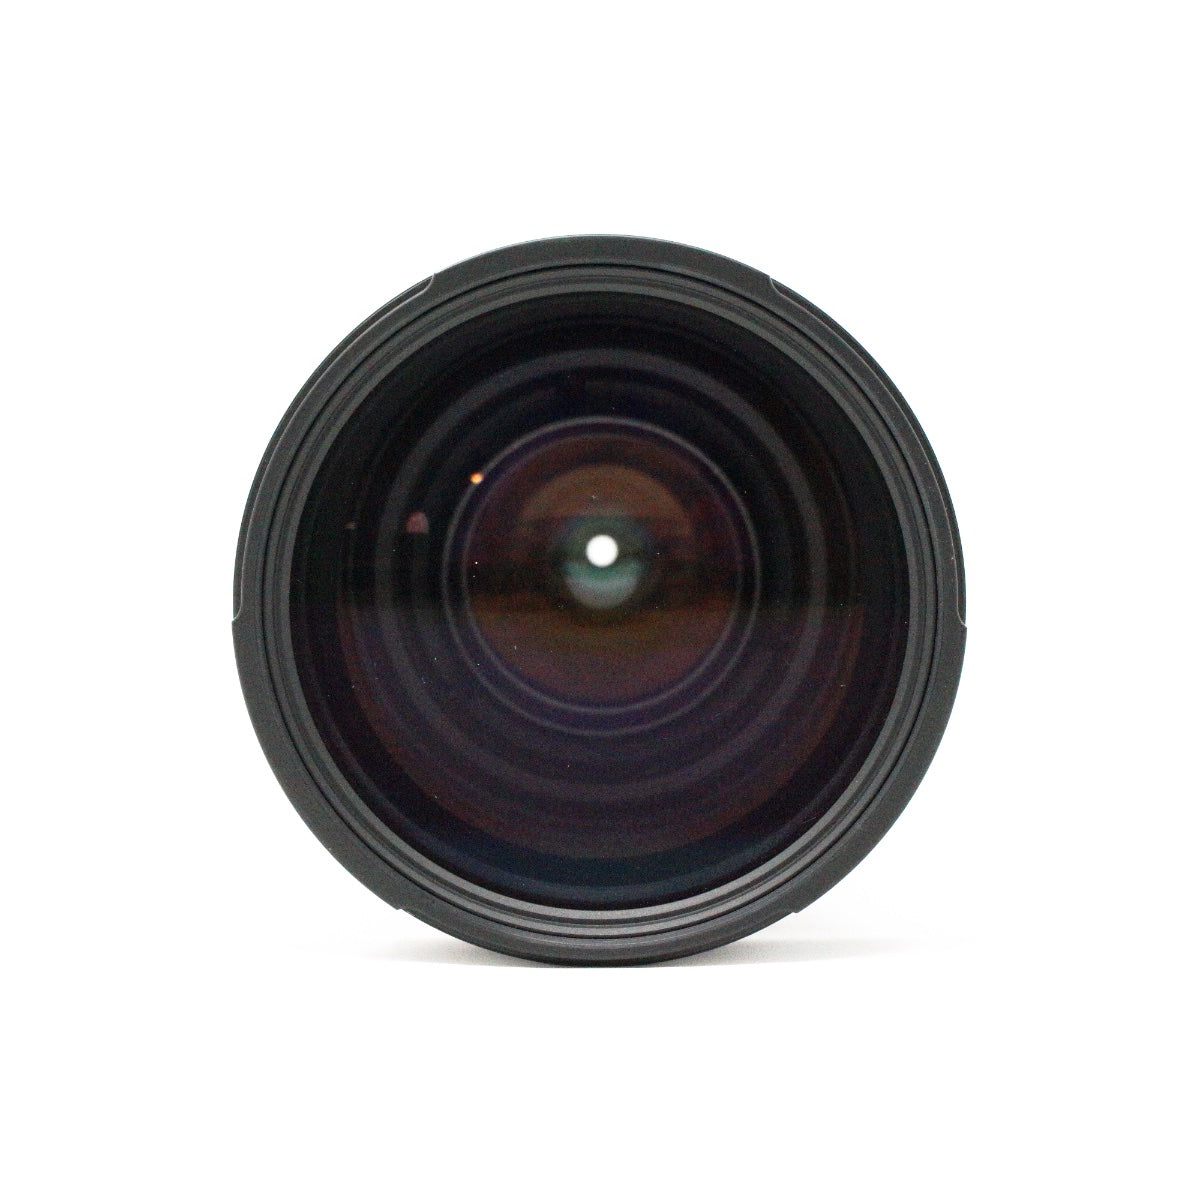 Used Sigma 170-500mm F5/6.3 APO Lens for Nikon AF